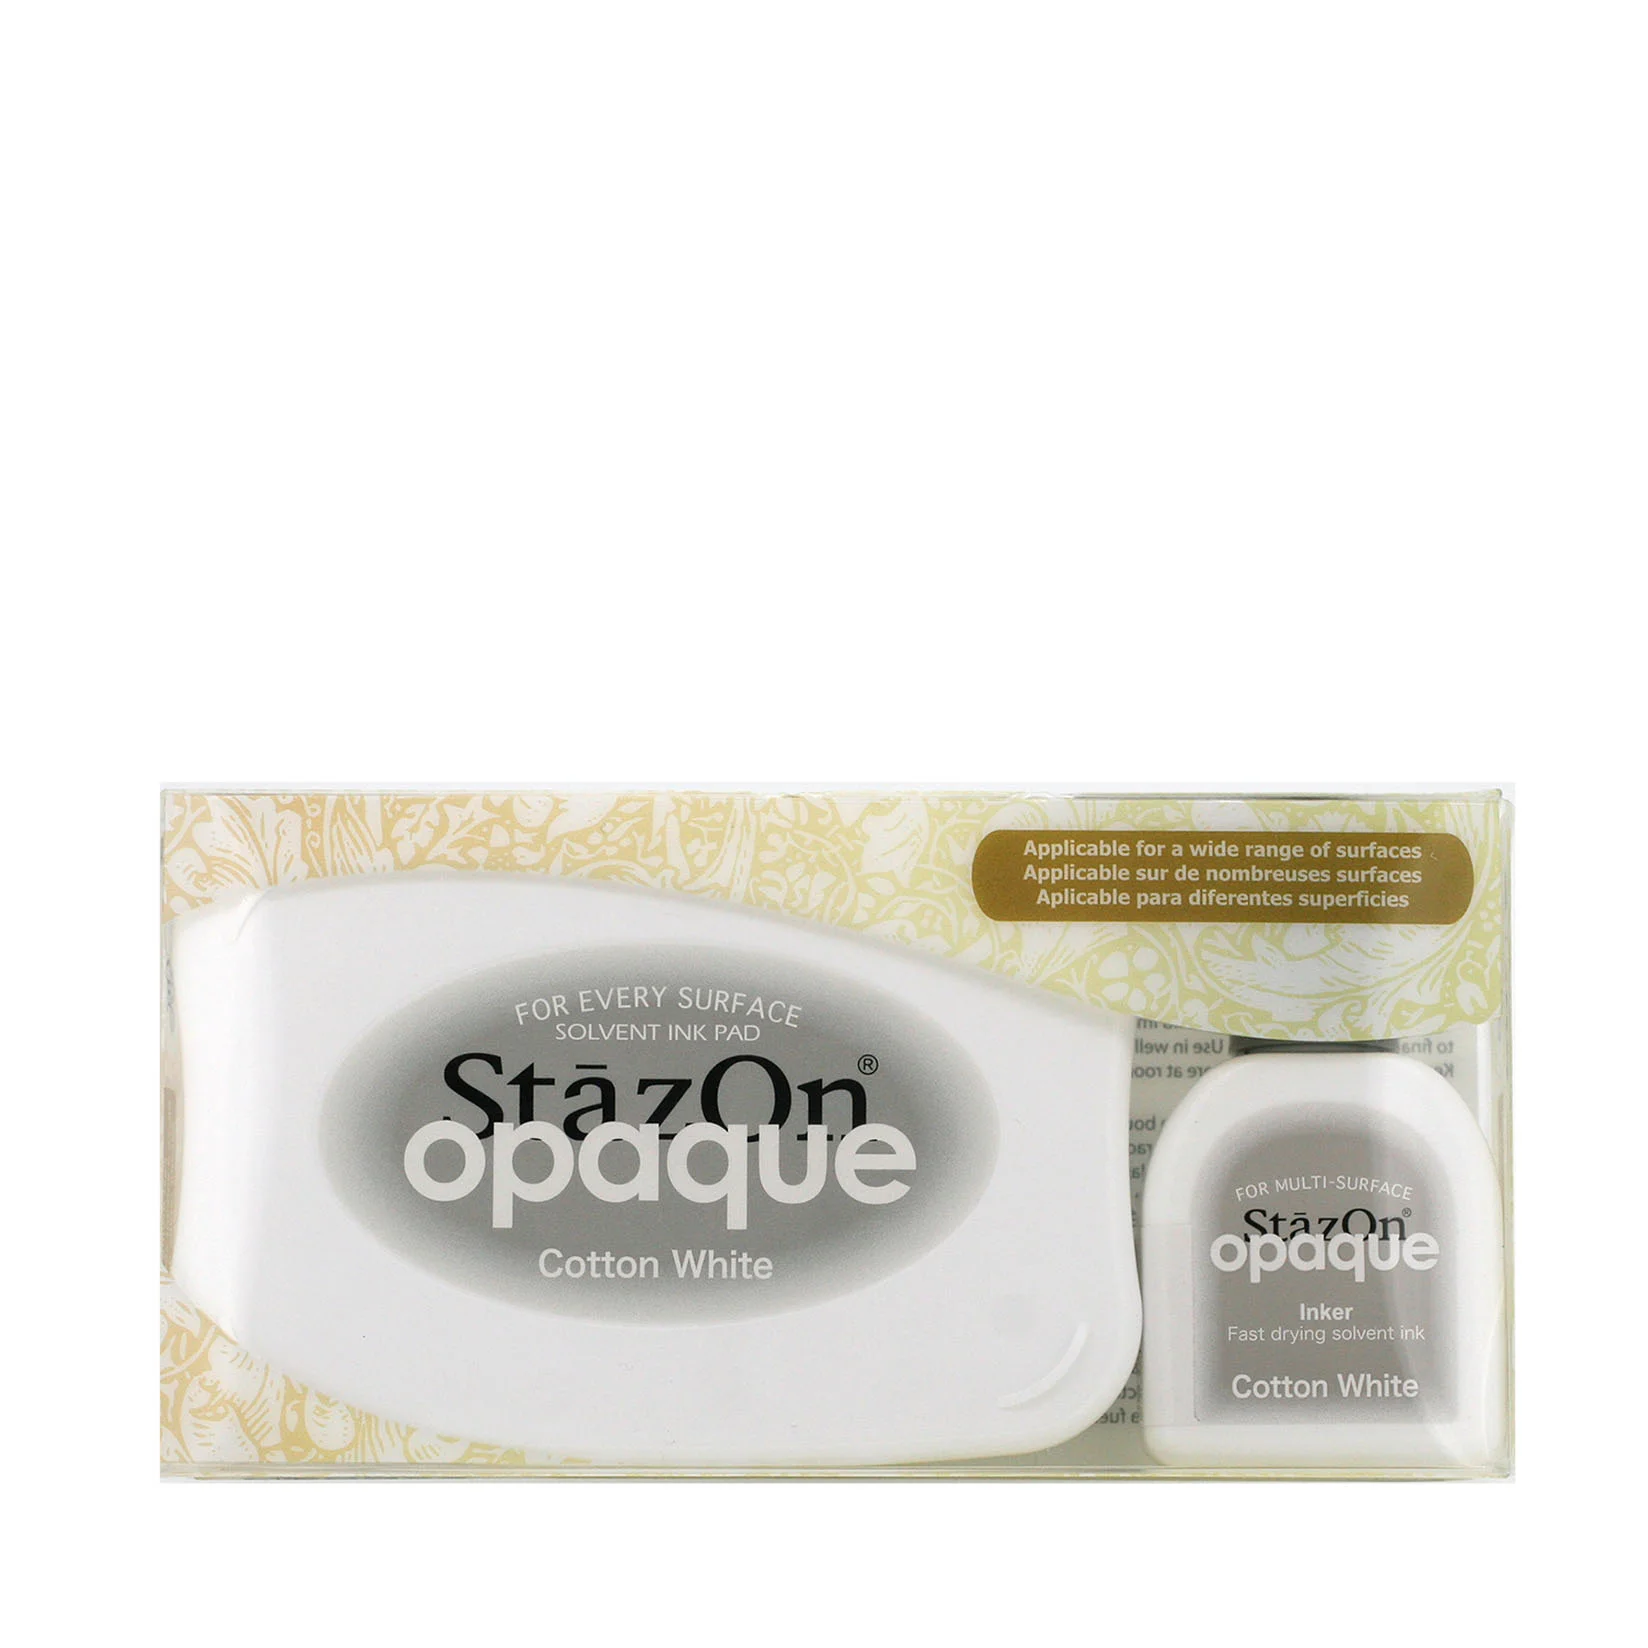 StazOn opaque Stempelkissen Cotton White